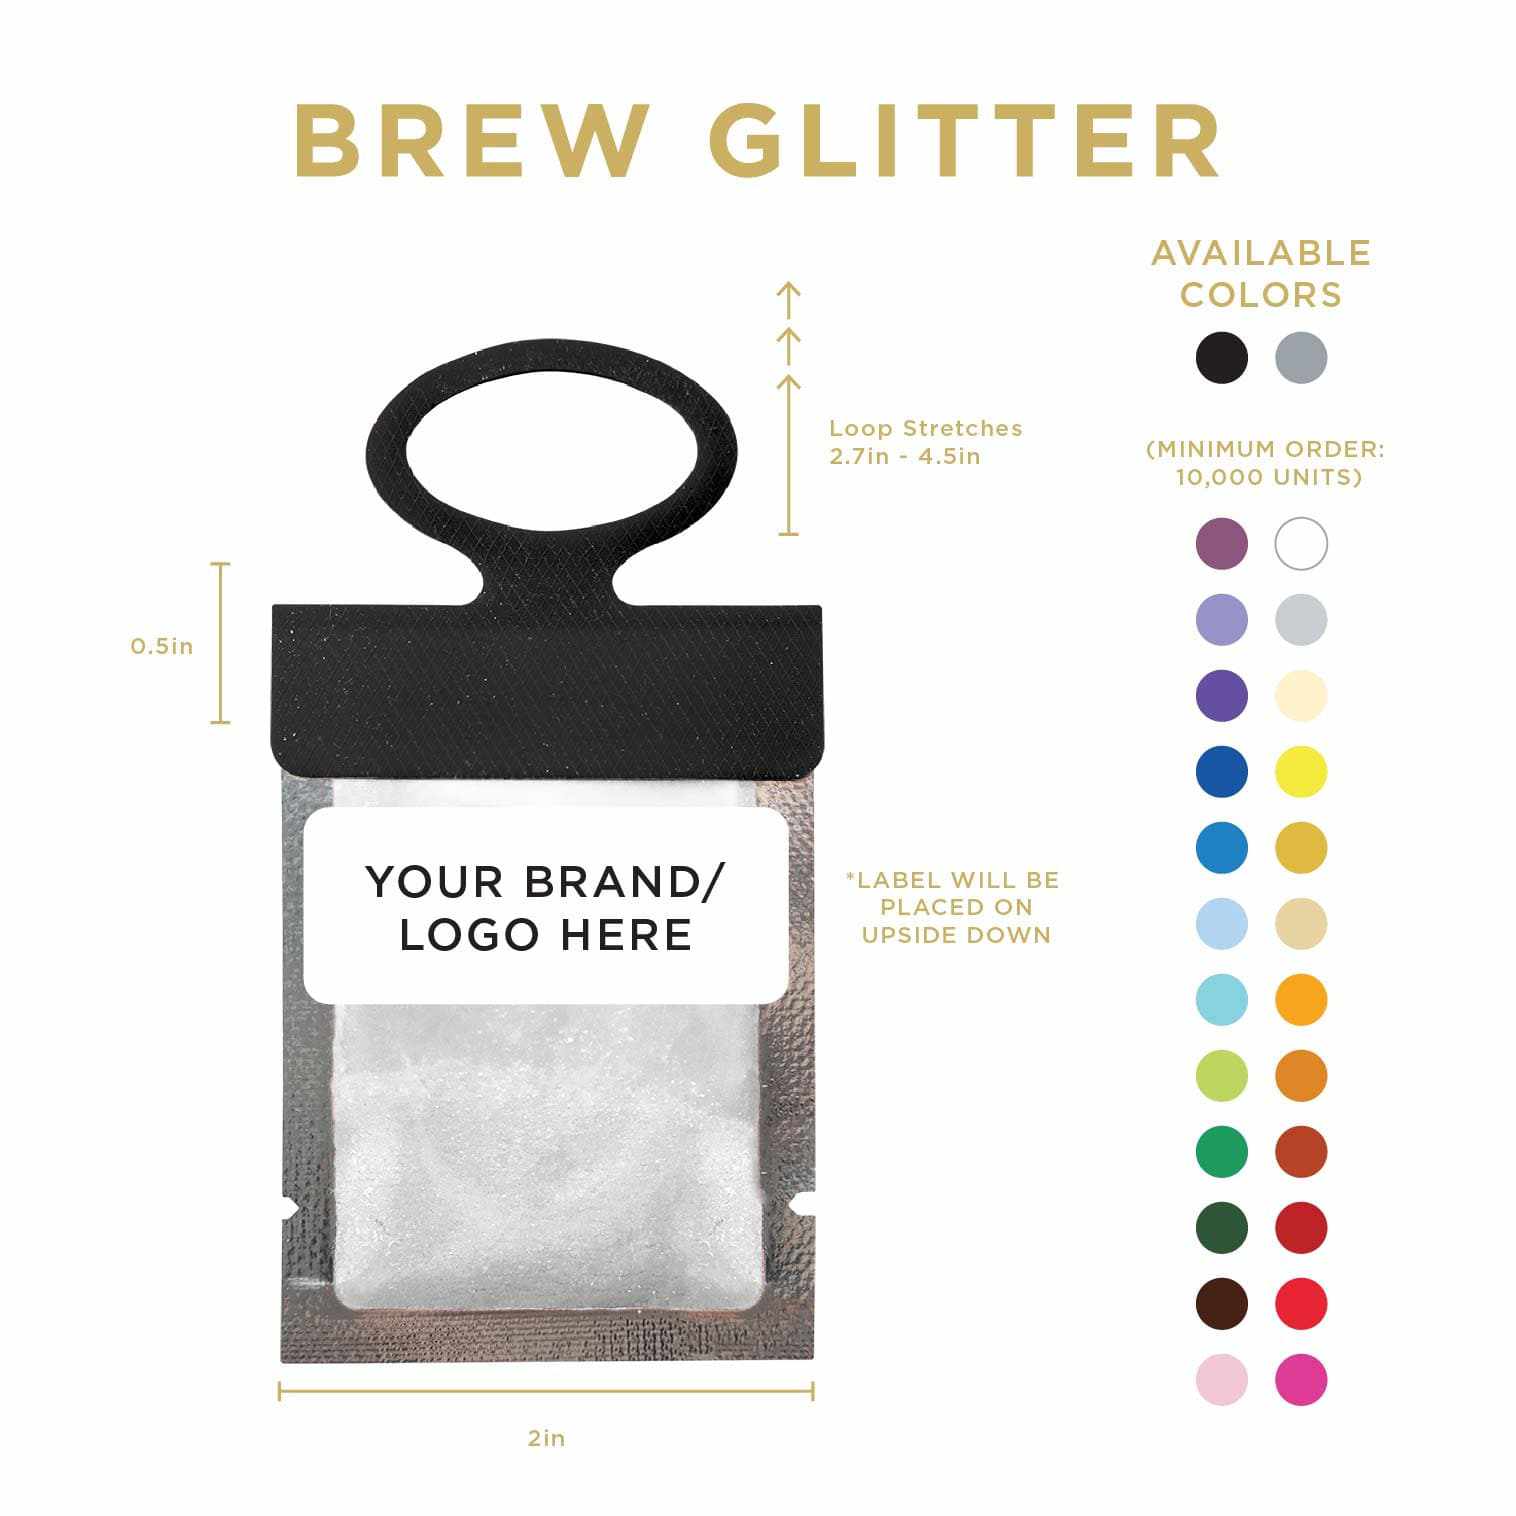 White Brew Glitter Necker | Private Label | Bakell